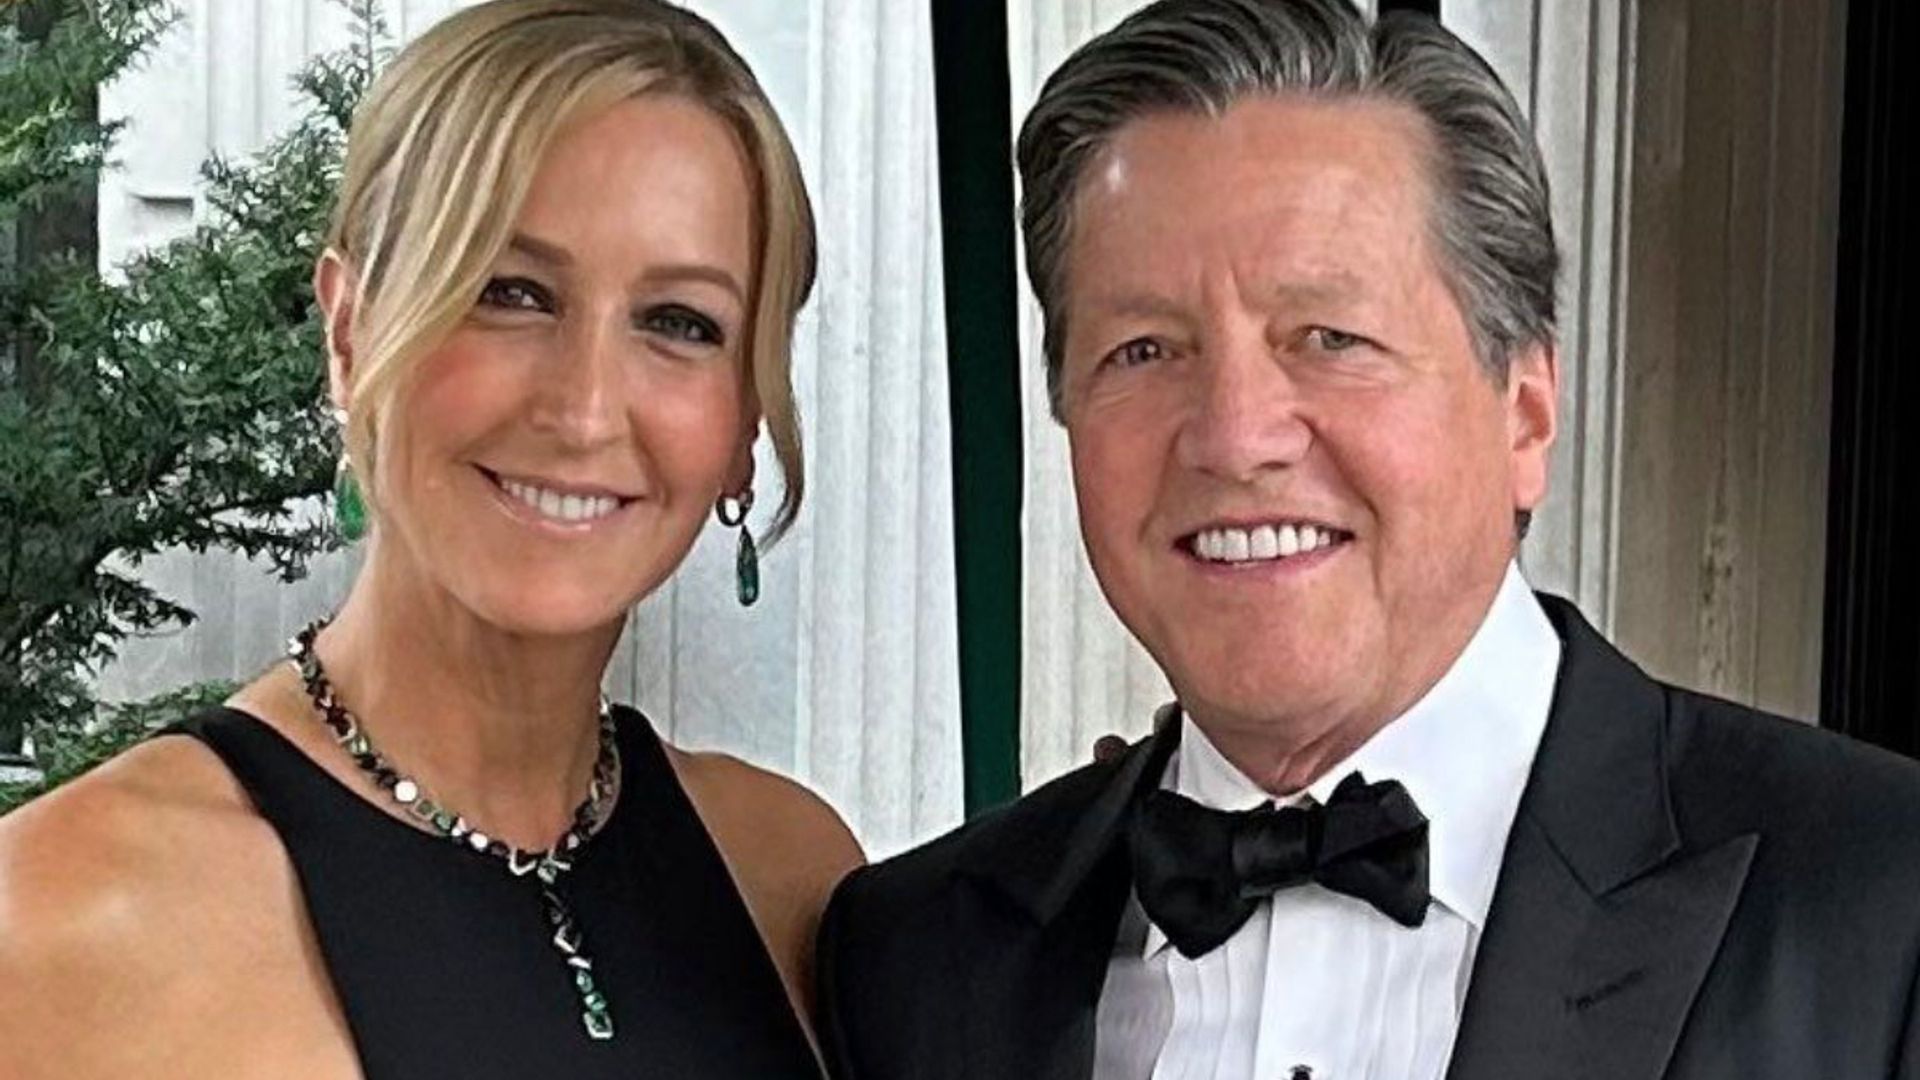 GMA host Lara Spencer’s husband has an eye-watering net worth 30x hers